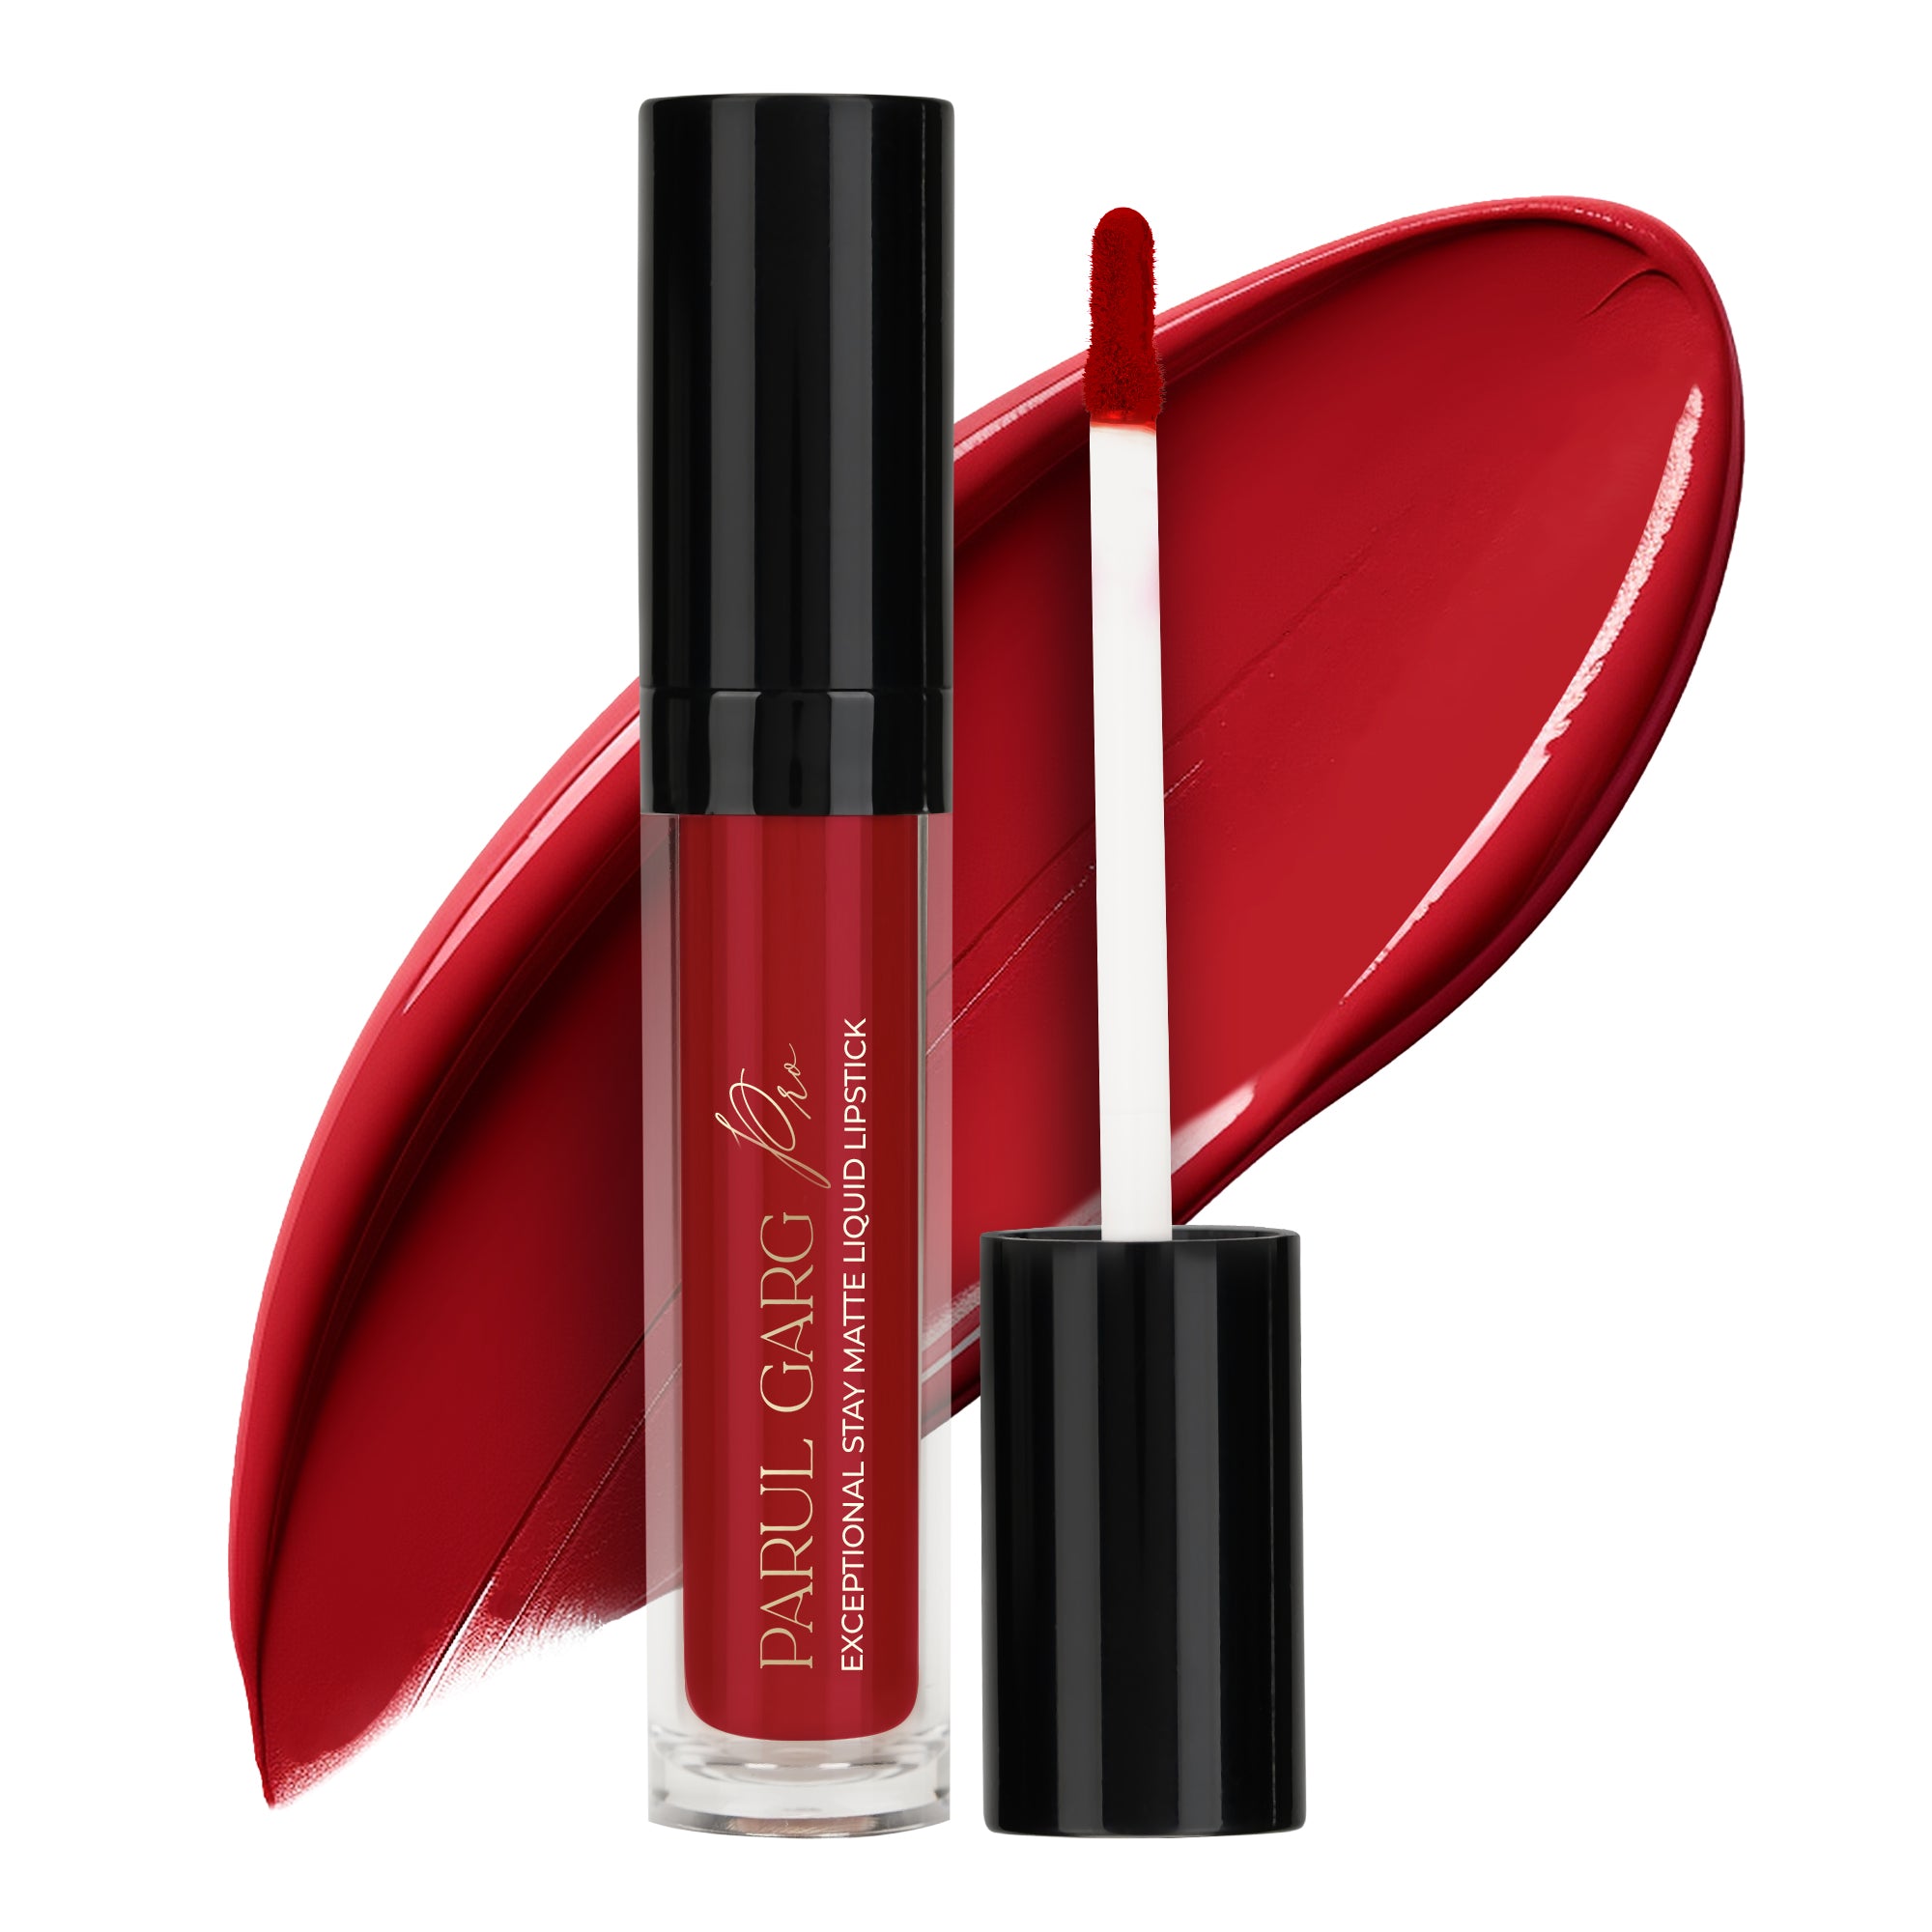 Exceptional Stay Matte Liquid Lipstick Shade: Poppy 12